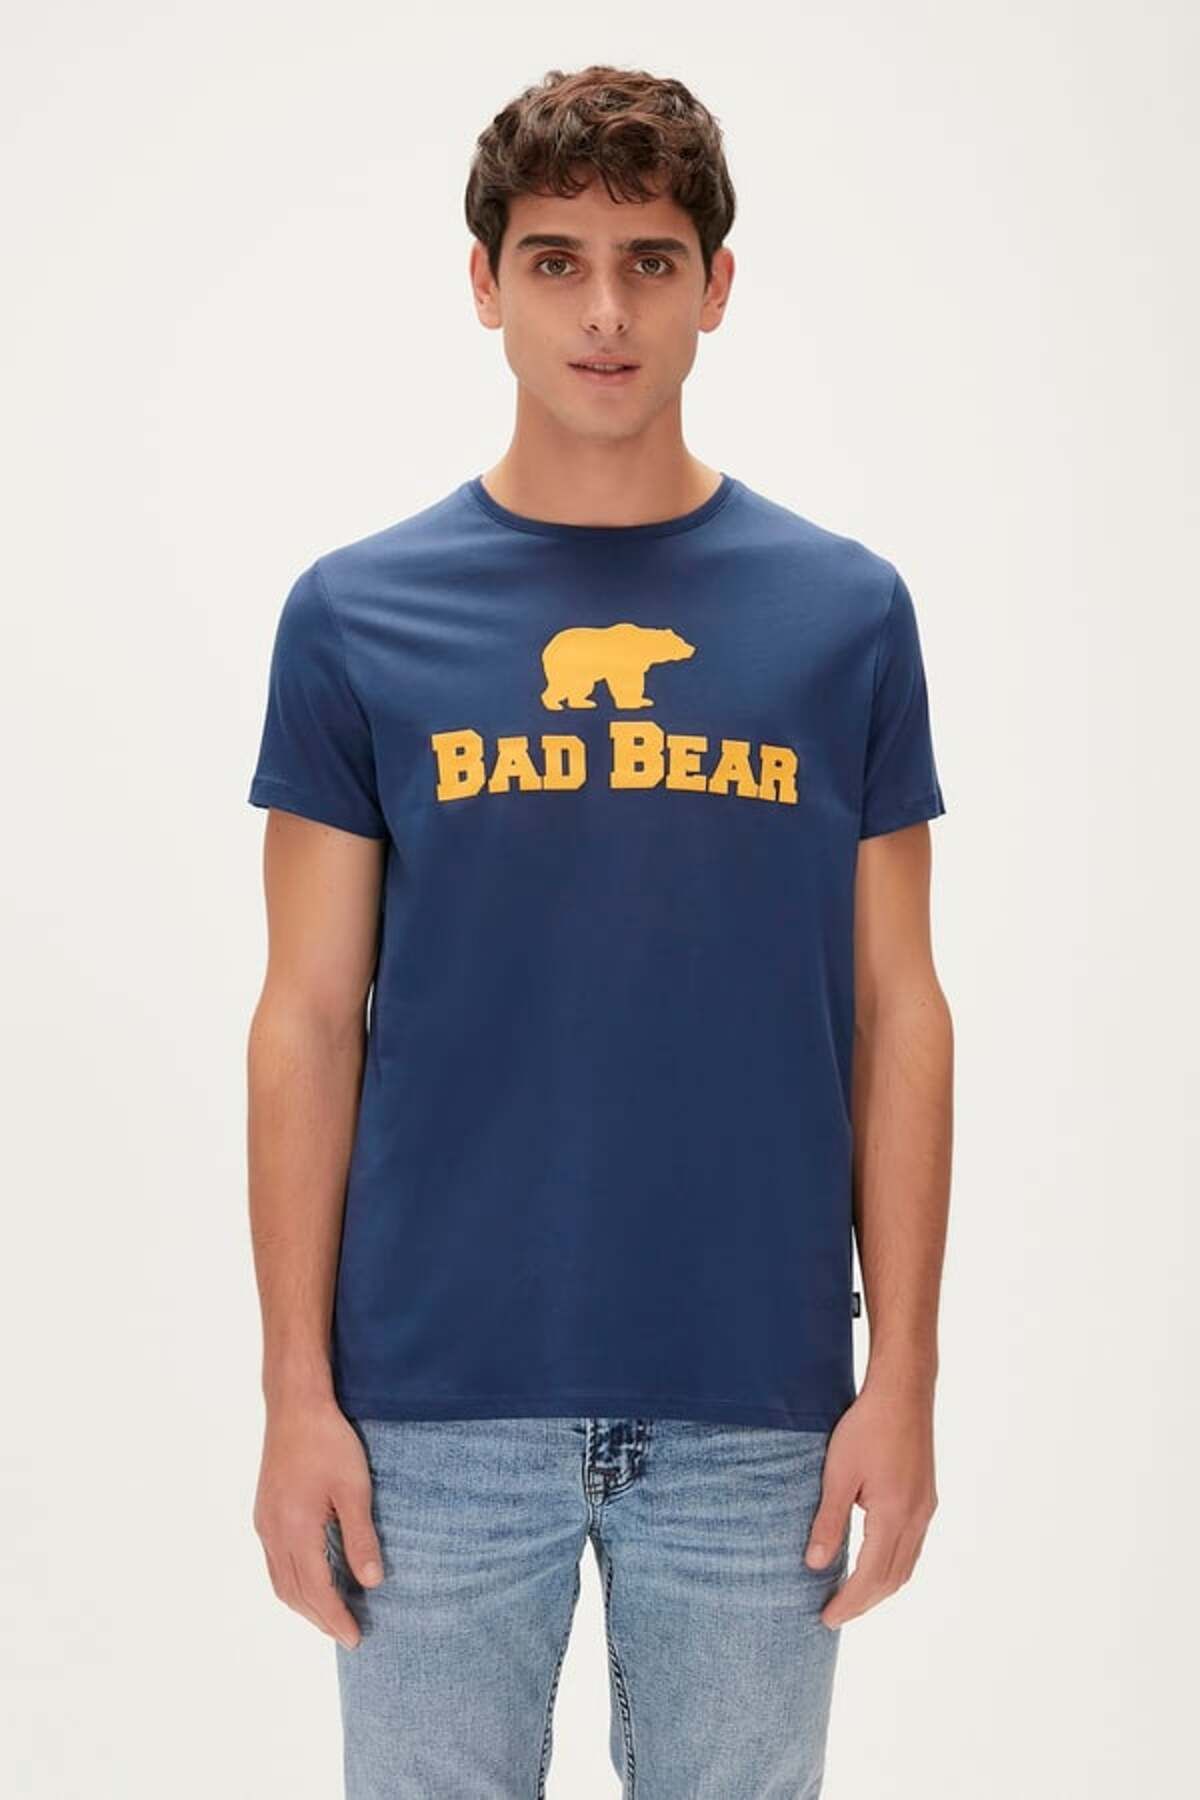 Bad Bear 19.01.07.002 Tee Erkek T-shirt Indıgo